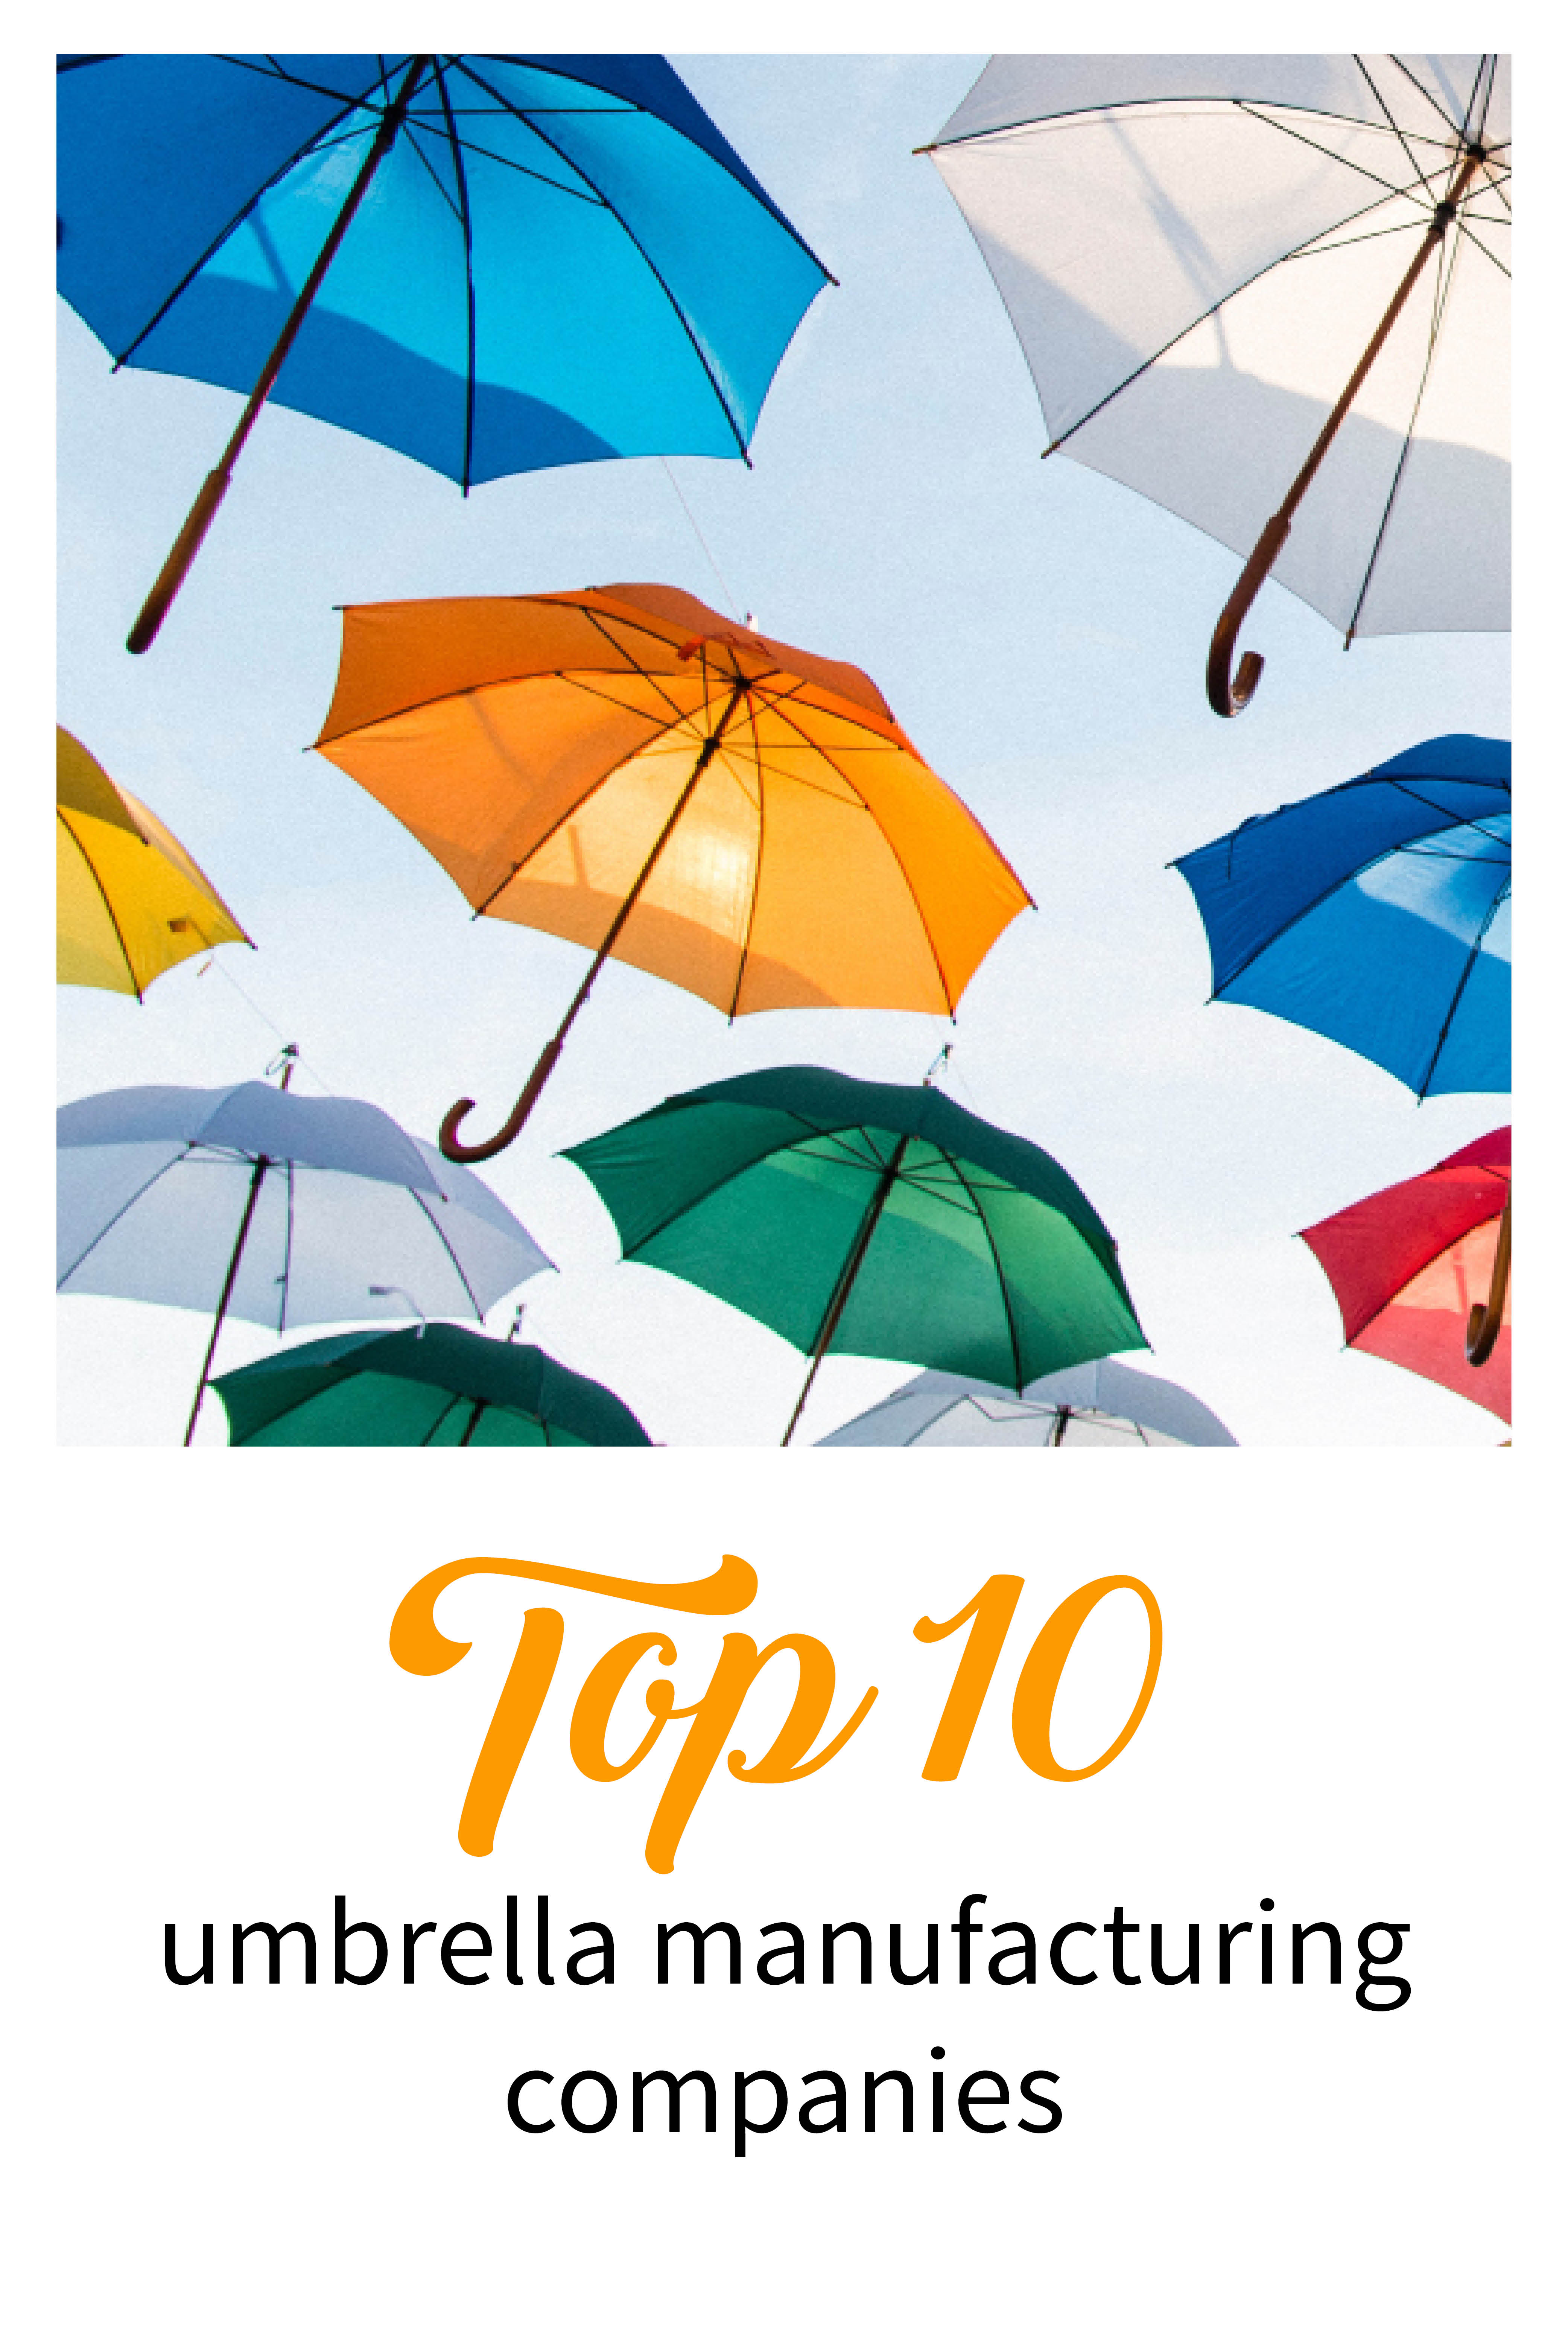 Top Umbrella Manufacturing Companies List